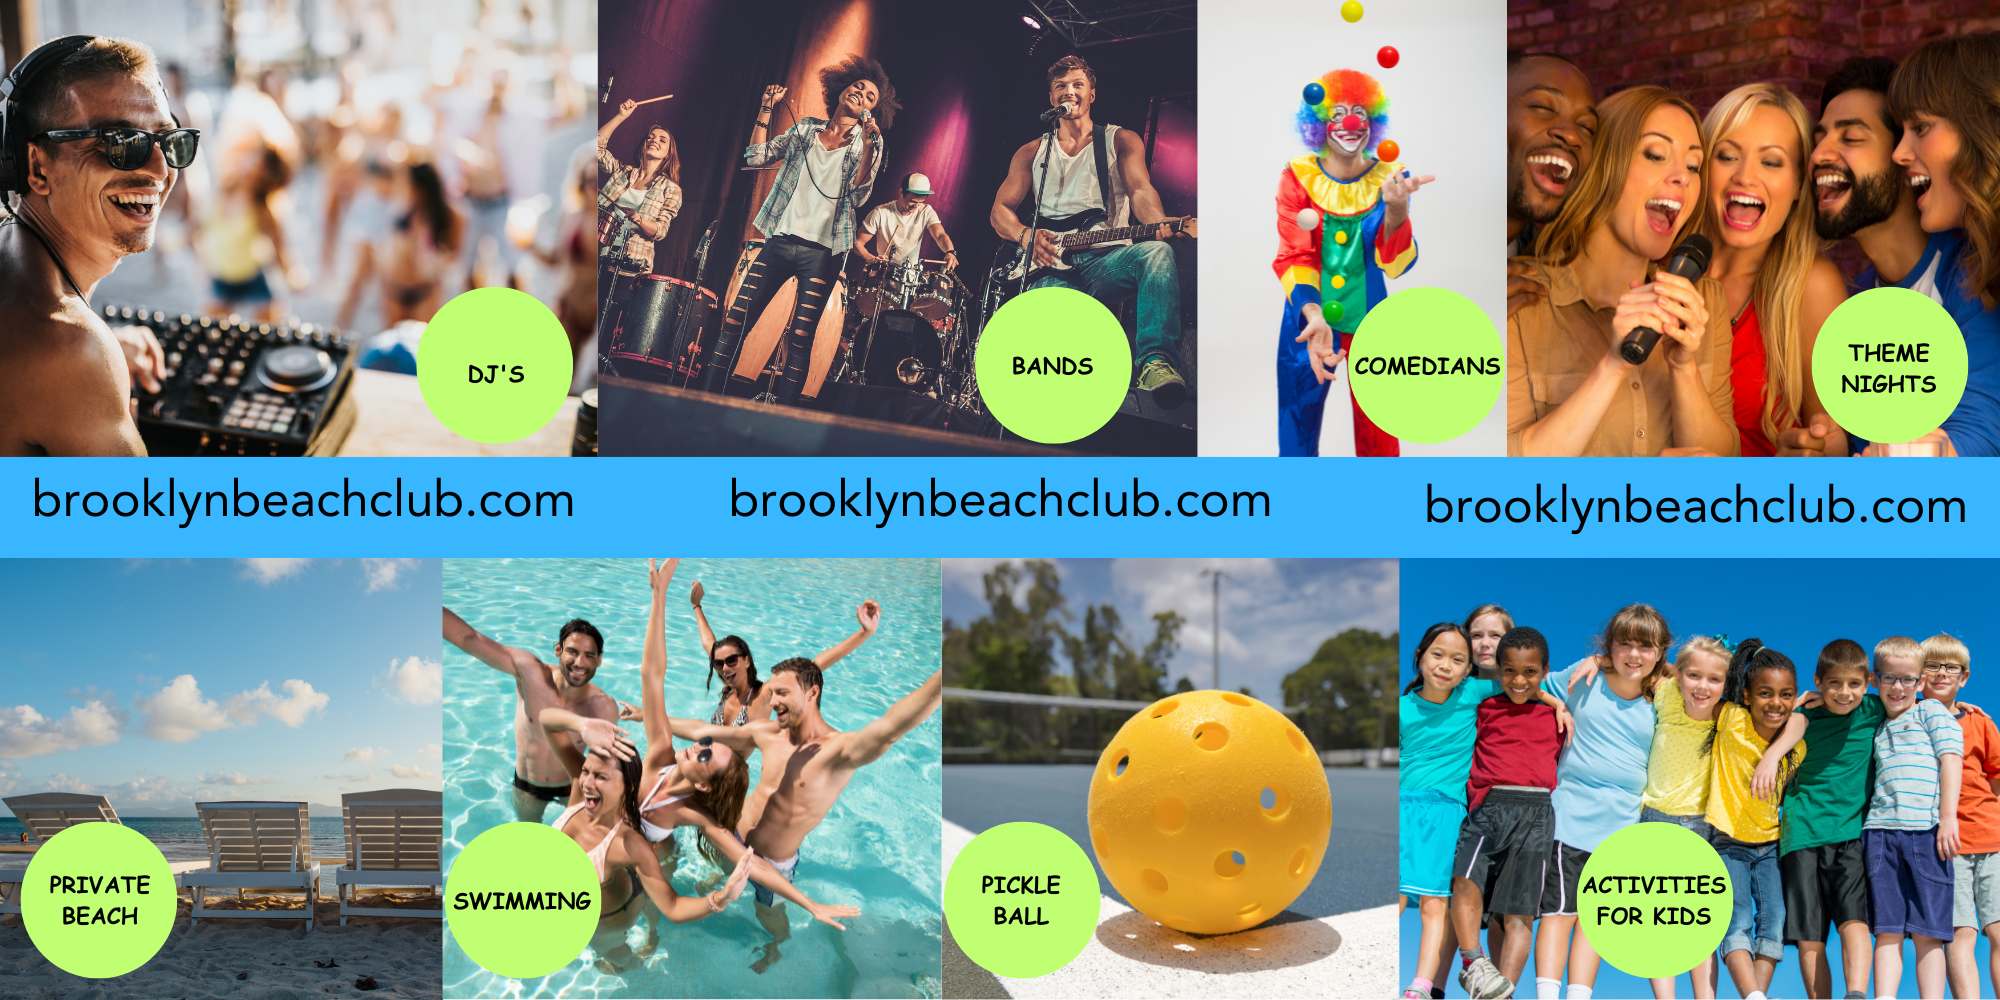 Brooklyn beach club NEW YORK CITY OFFER OF ENTERTAINMENT